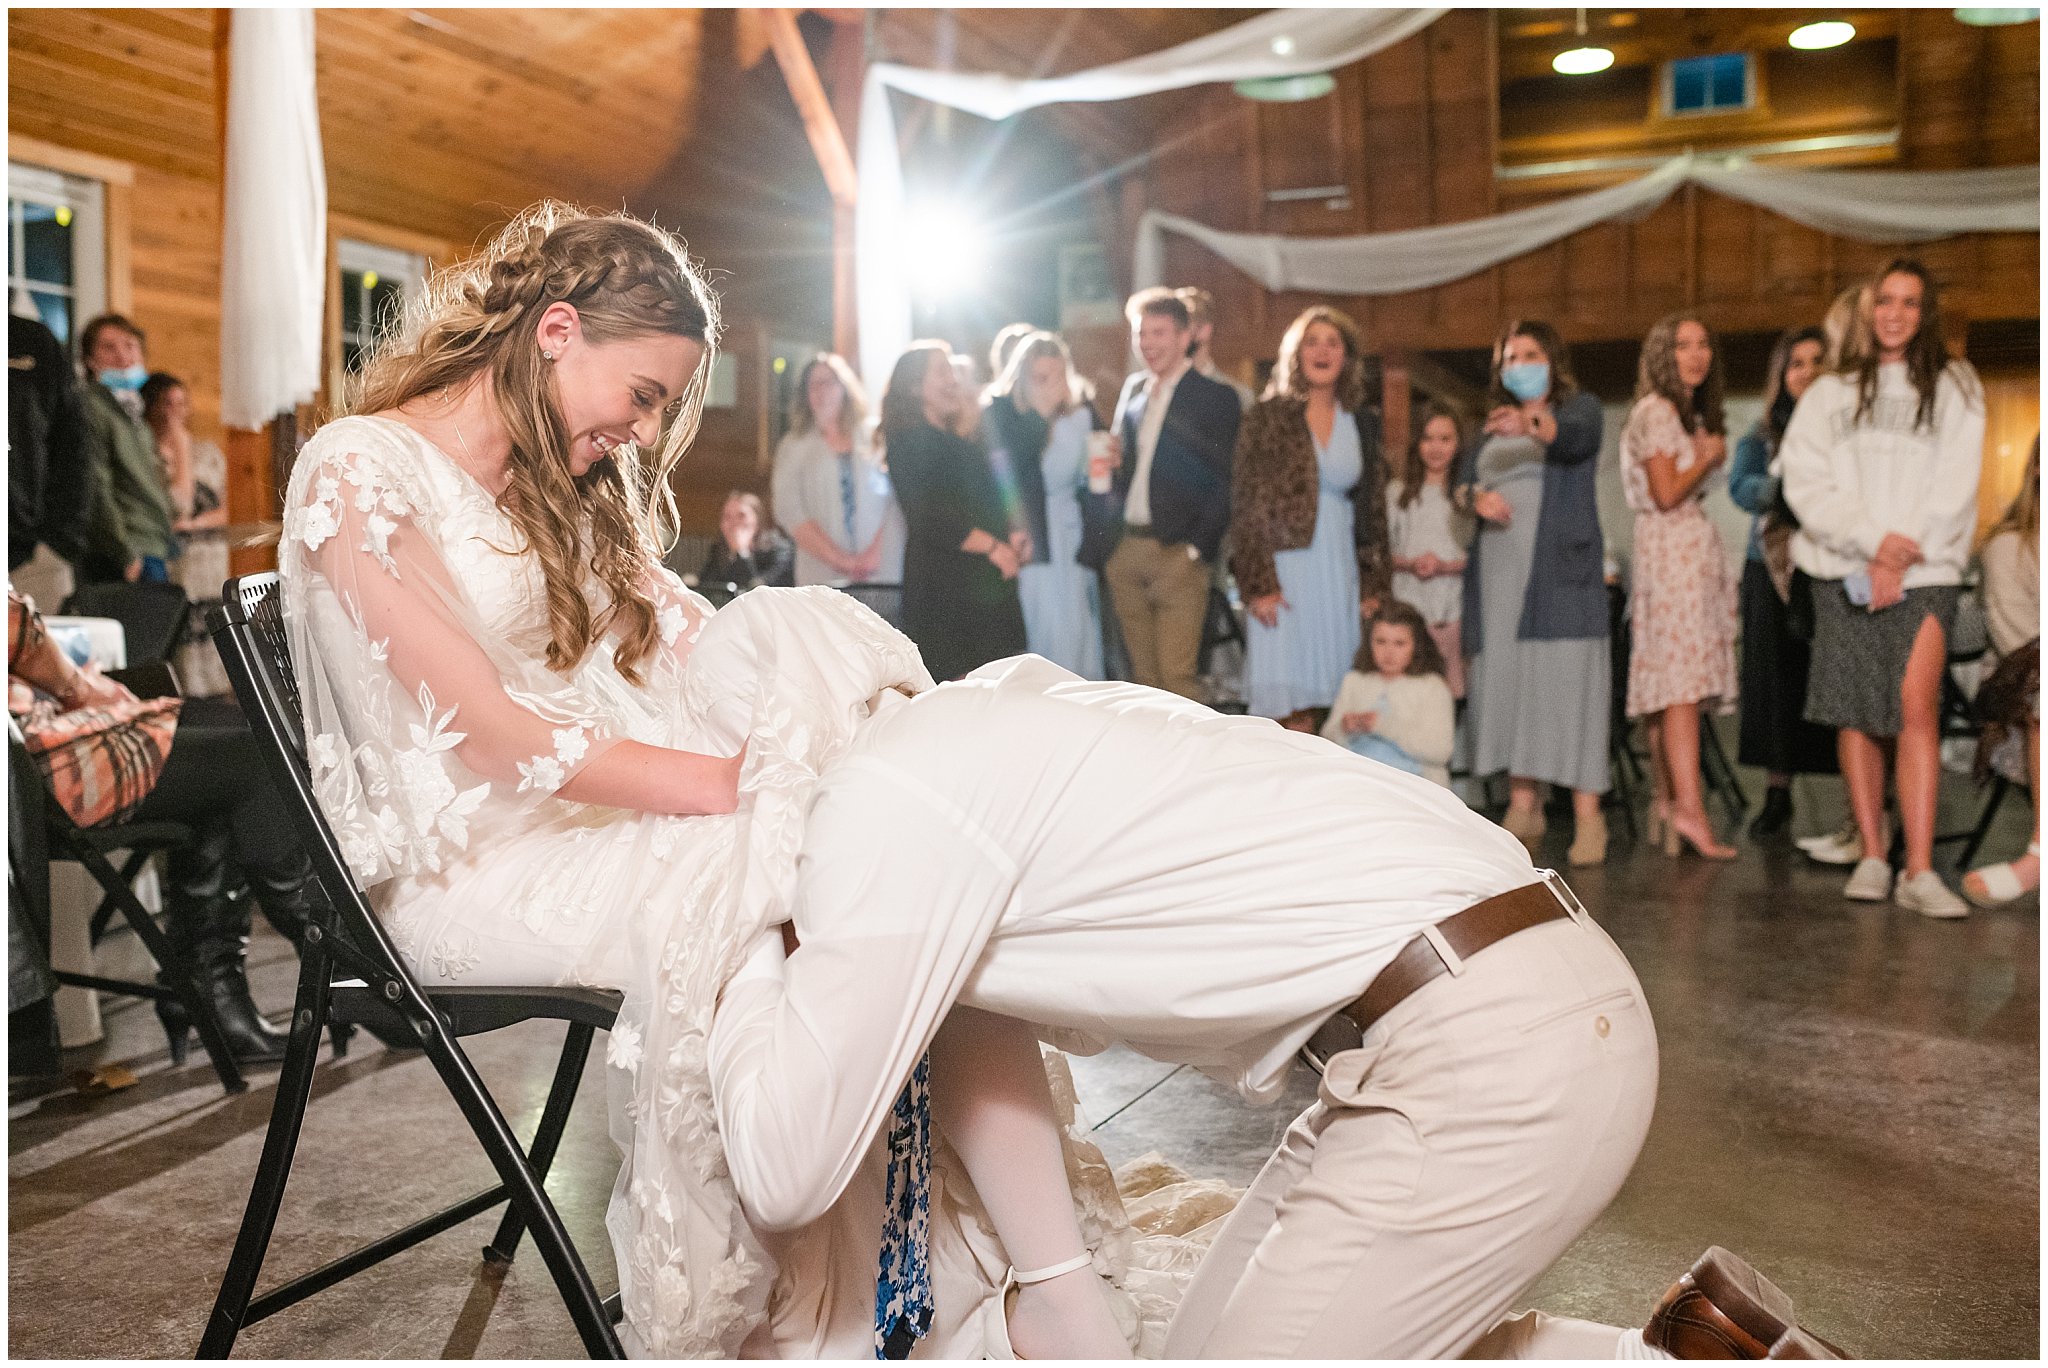 Garter toss during barn wedding | Oquirrh Mountain Temple and Draper Day Barn Winter Wedding | Jessie and Dallin Photography